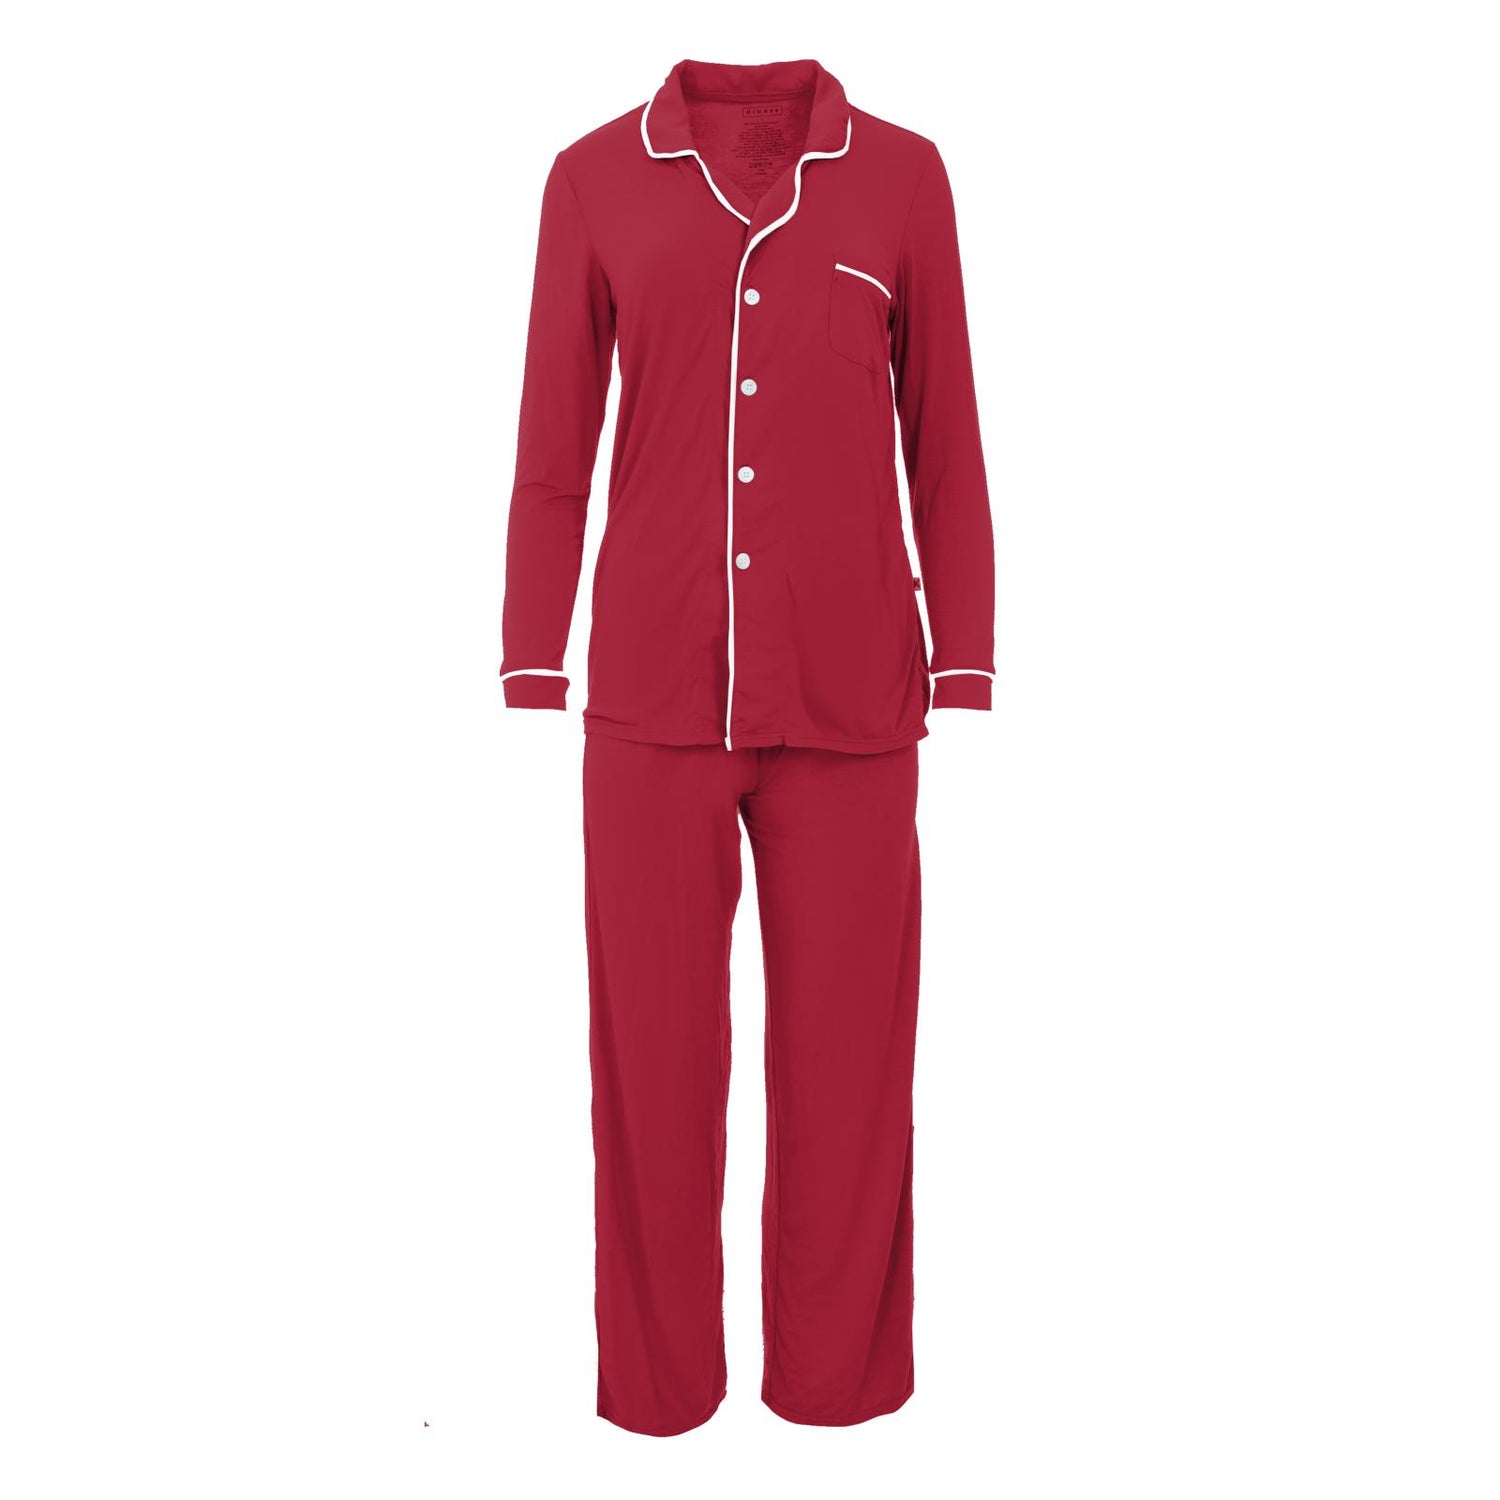 Collared Pajama Set in Crimson with Natural